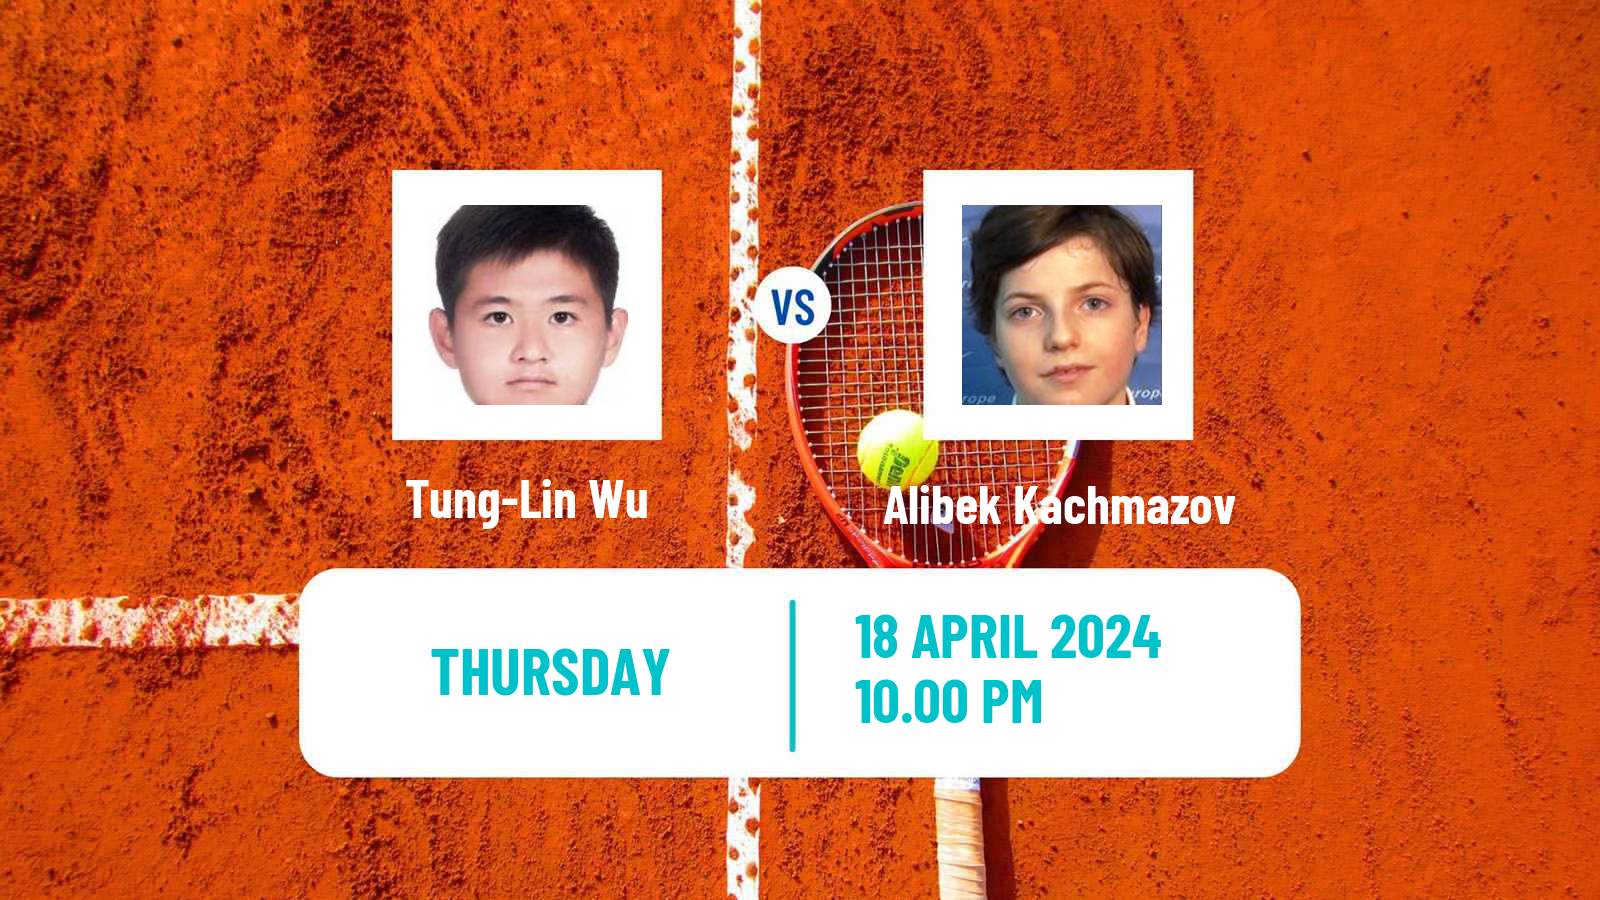 Tennis Gwangju Challenger Men Tung-Lin Wu - Alibek Kachmazov